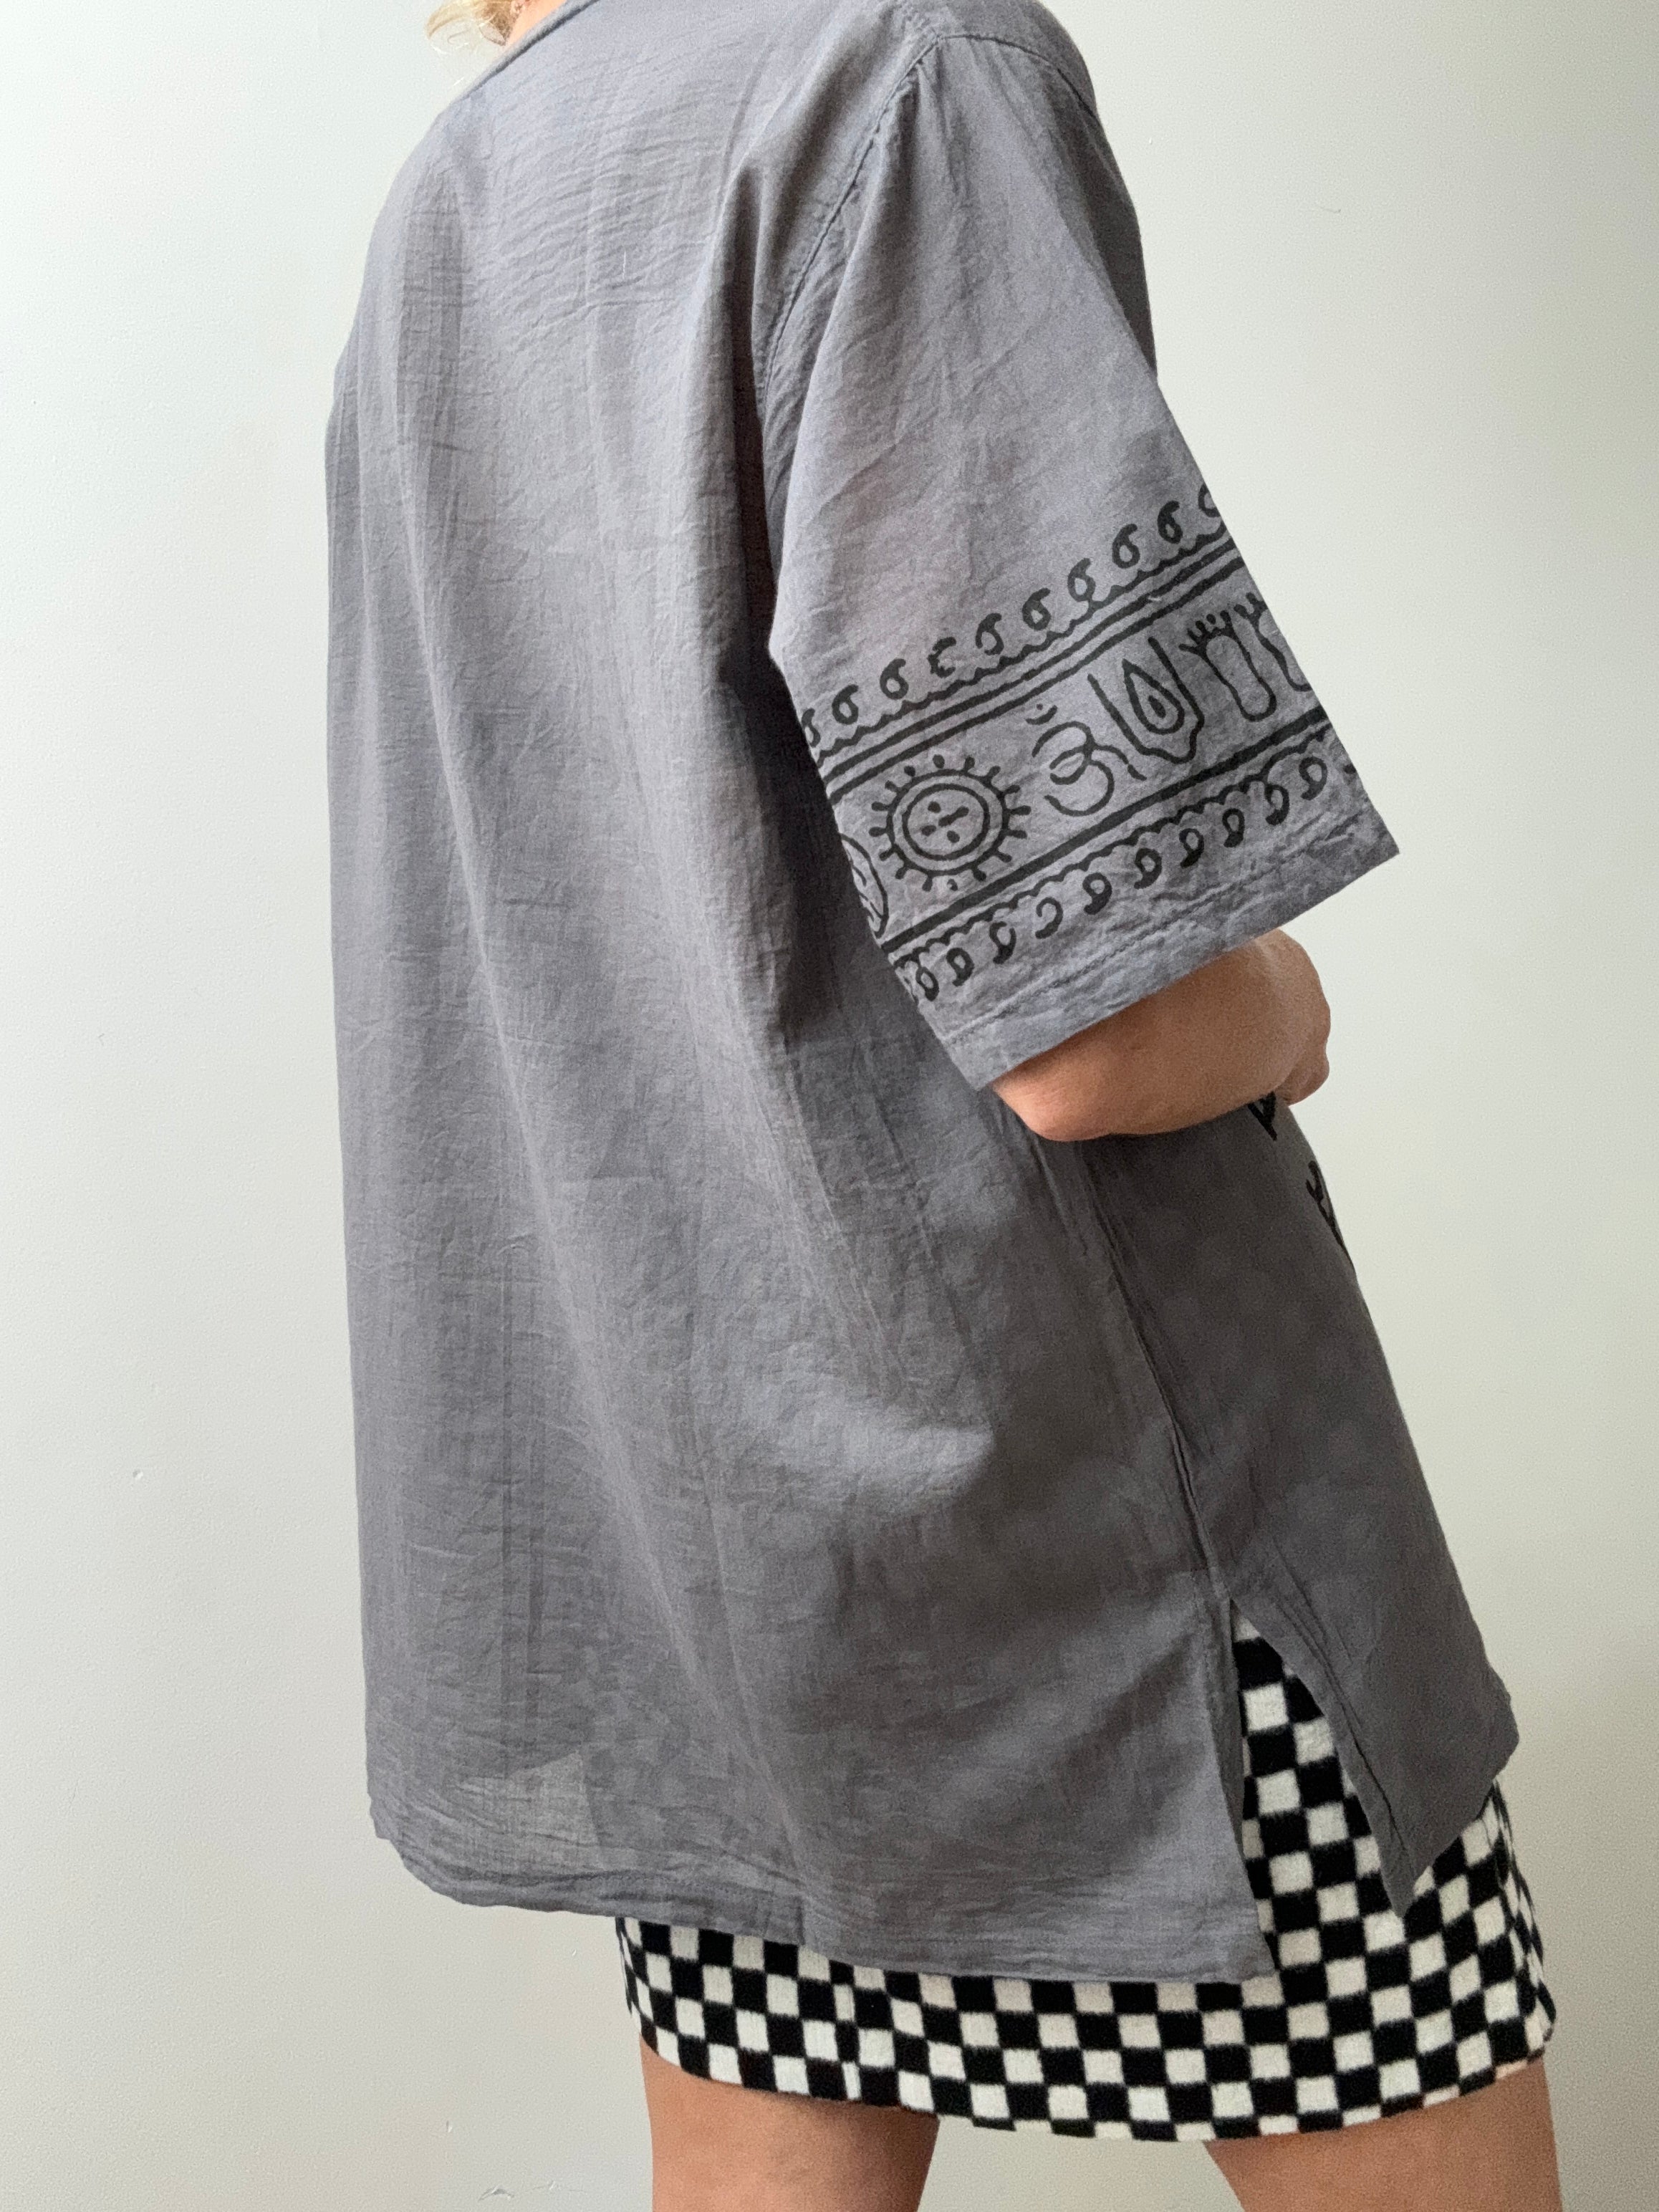 Future Nomads Tops Block Print Ganesh Short Sleeve Top - Grey